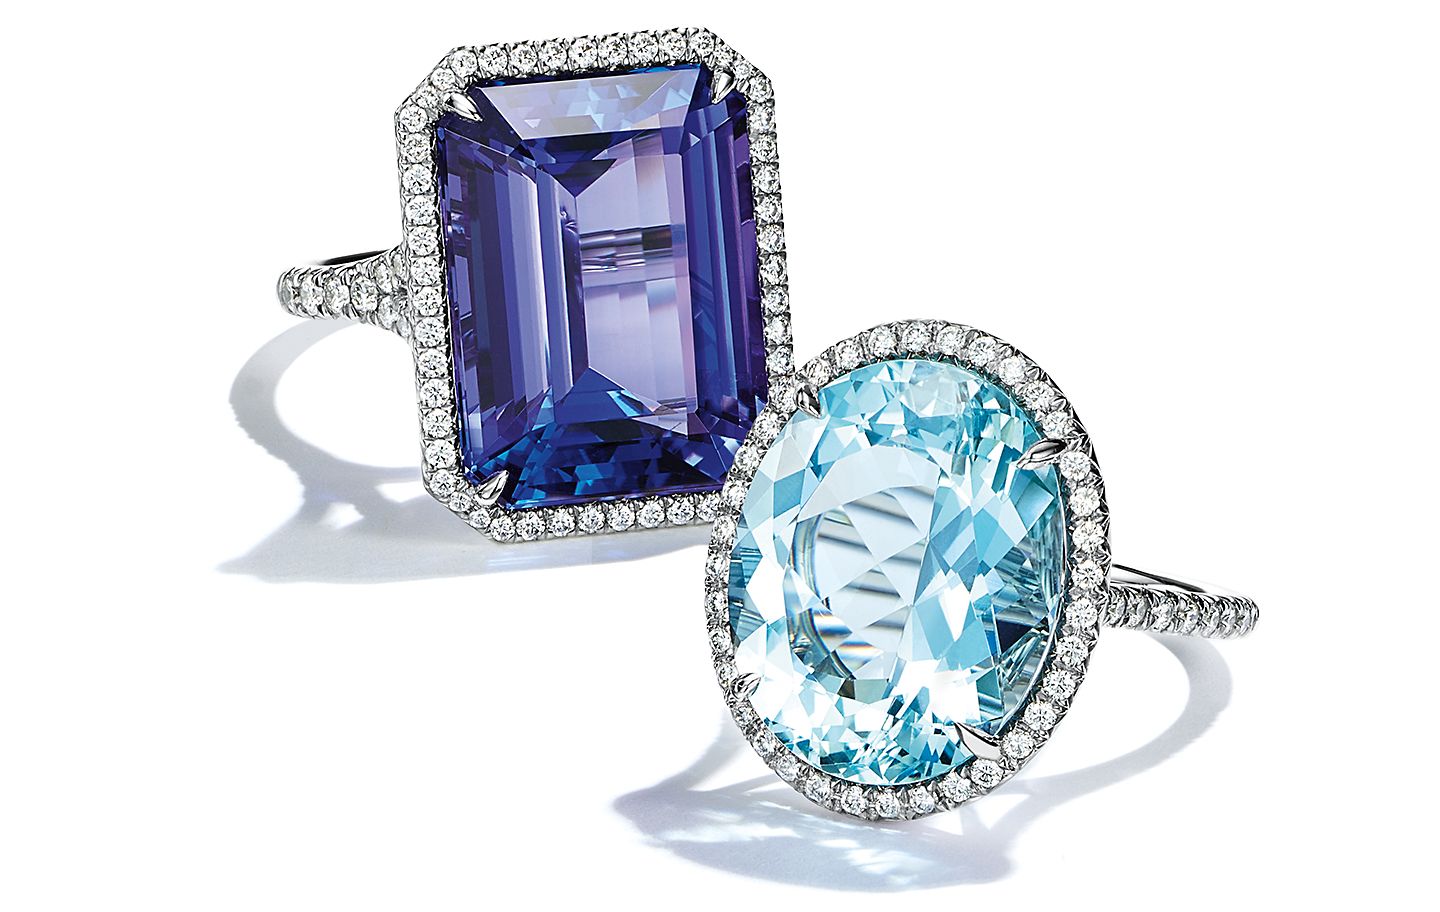 Tiffany & Co. Diamond, Gemstone & Pearl Jewelry Care